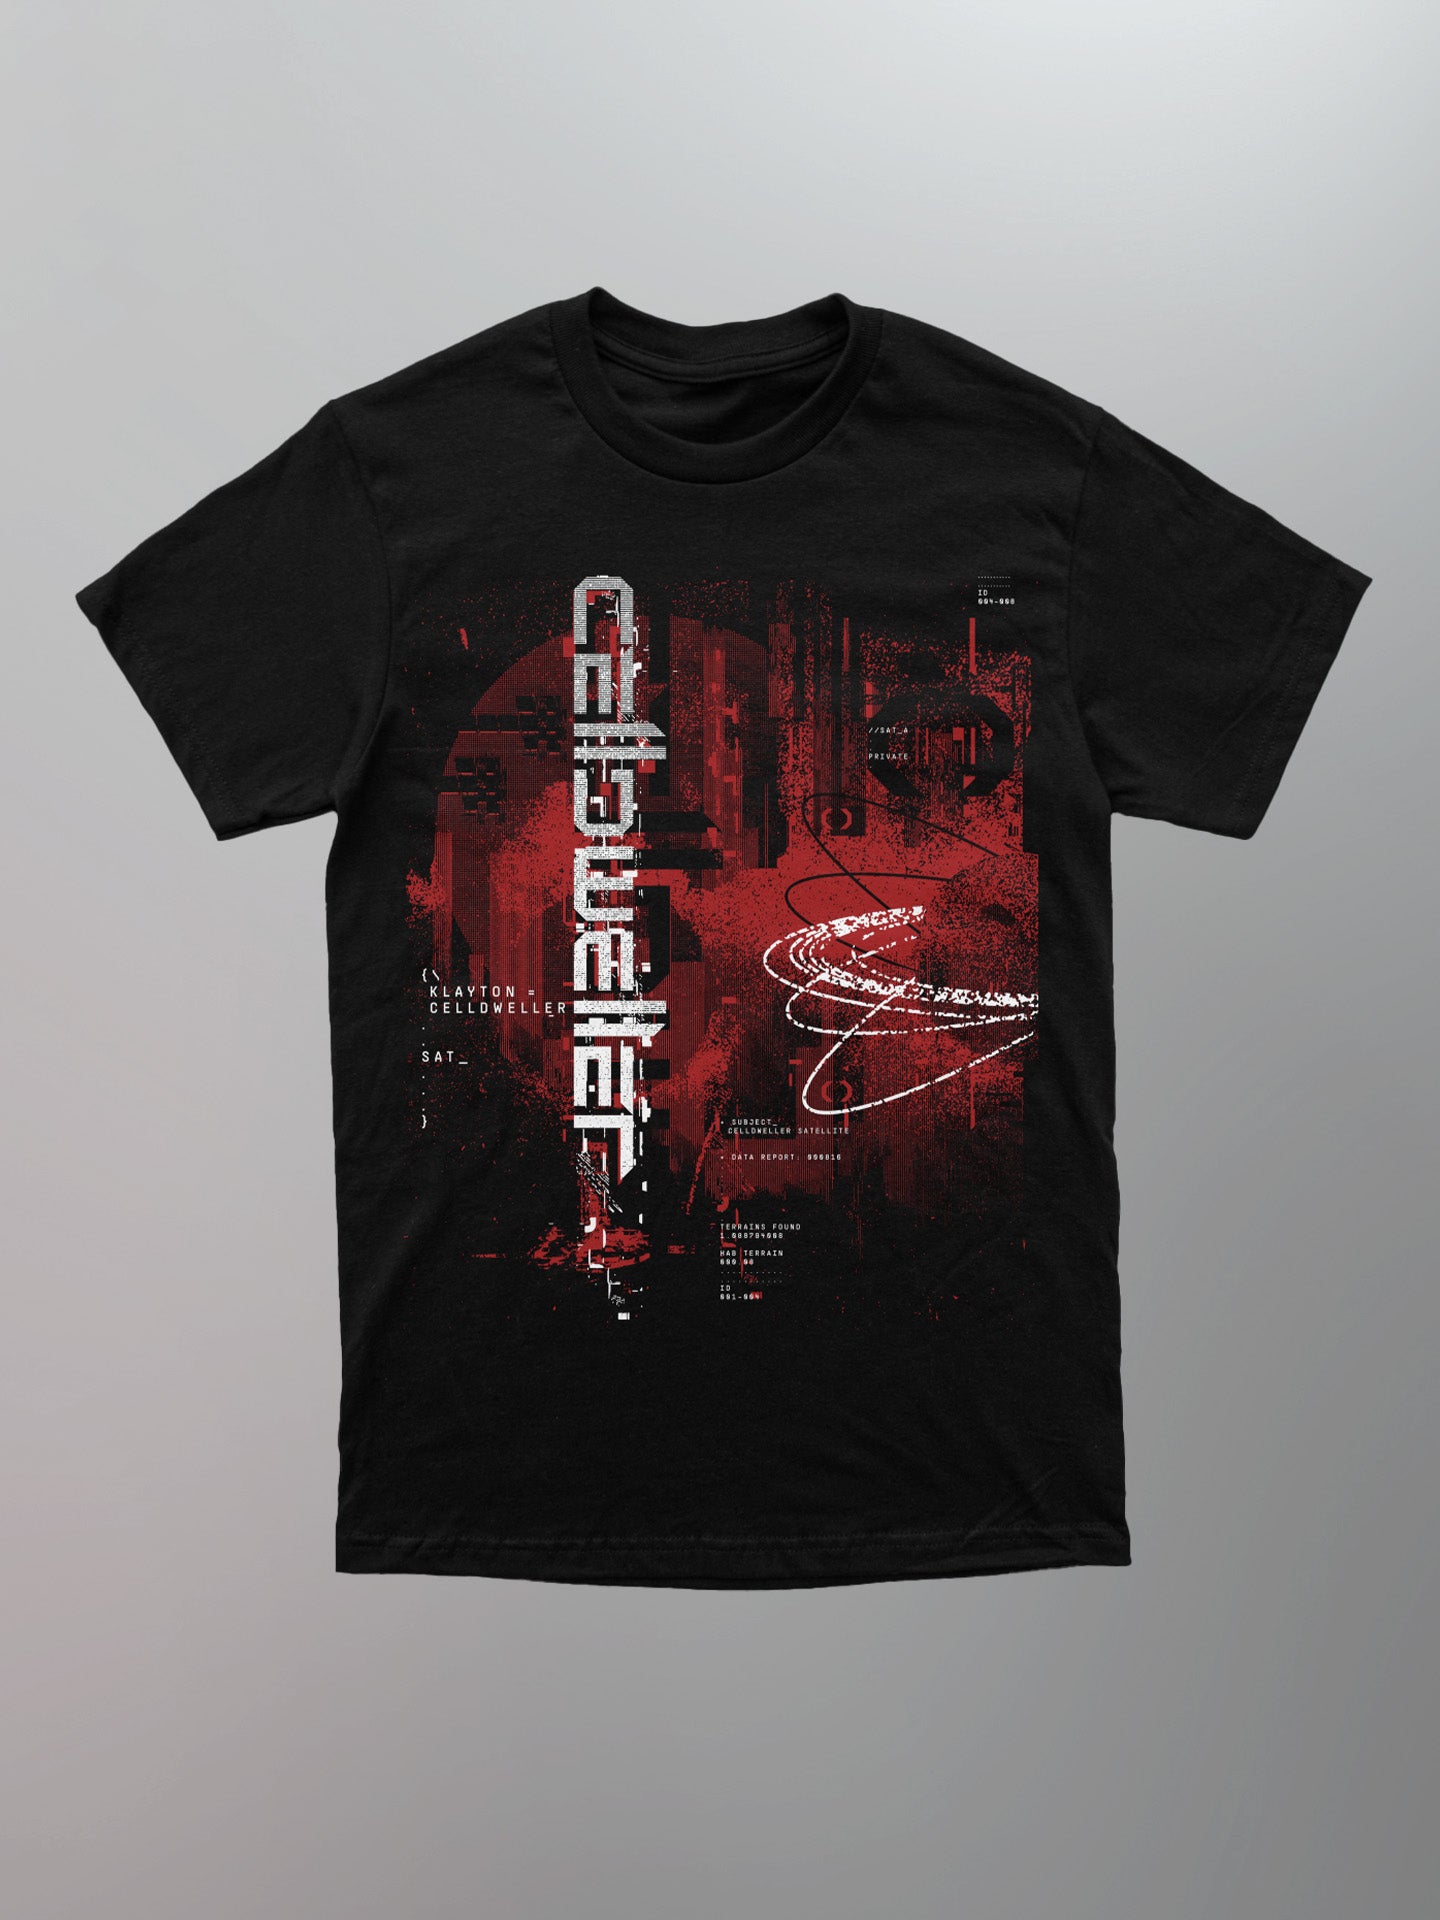 Celldweller - Satellites TEK Shirt